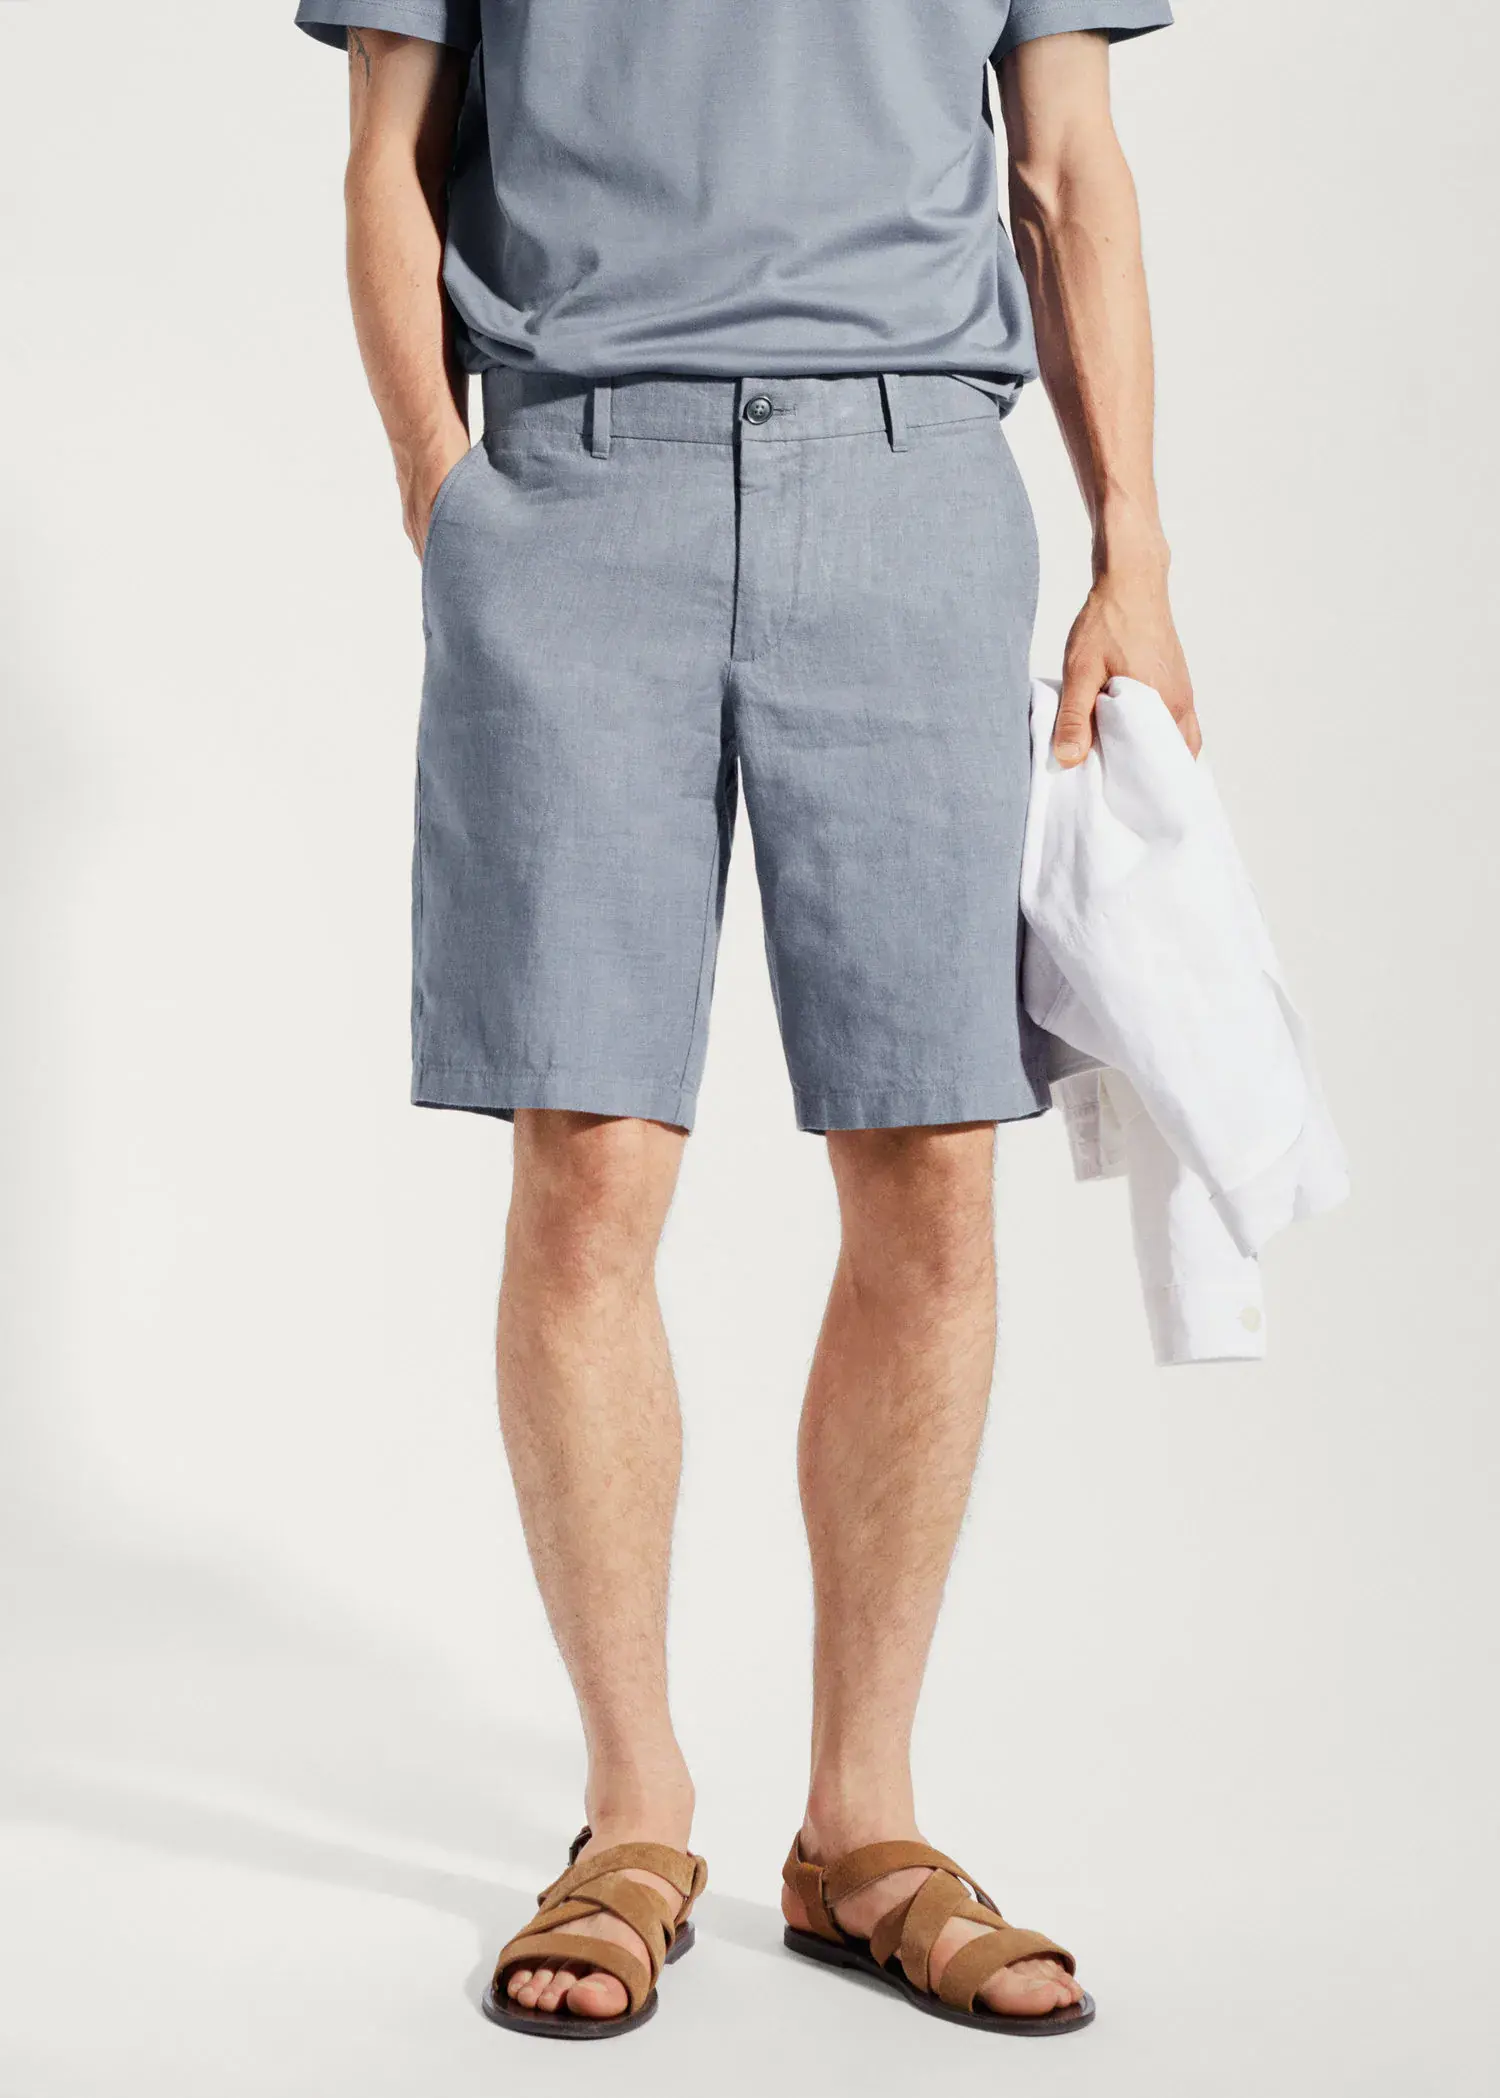 Mango 100% linen shorts. a man wearing a pair of gray shorts. 